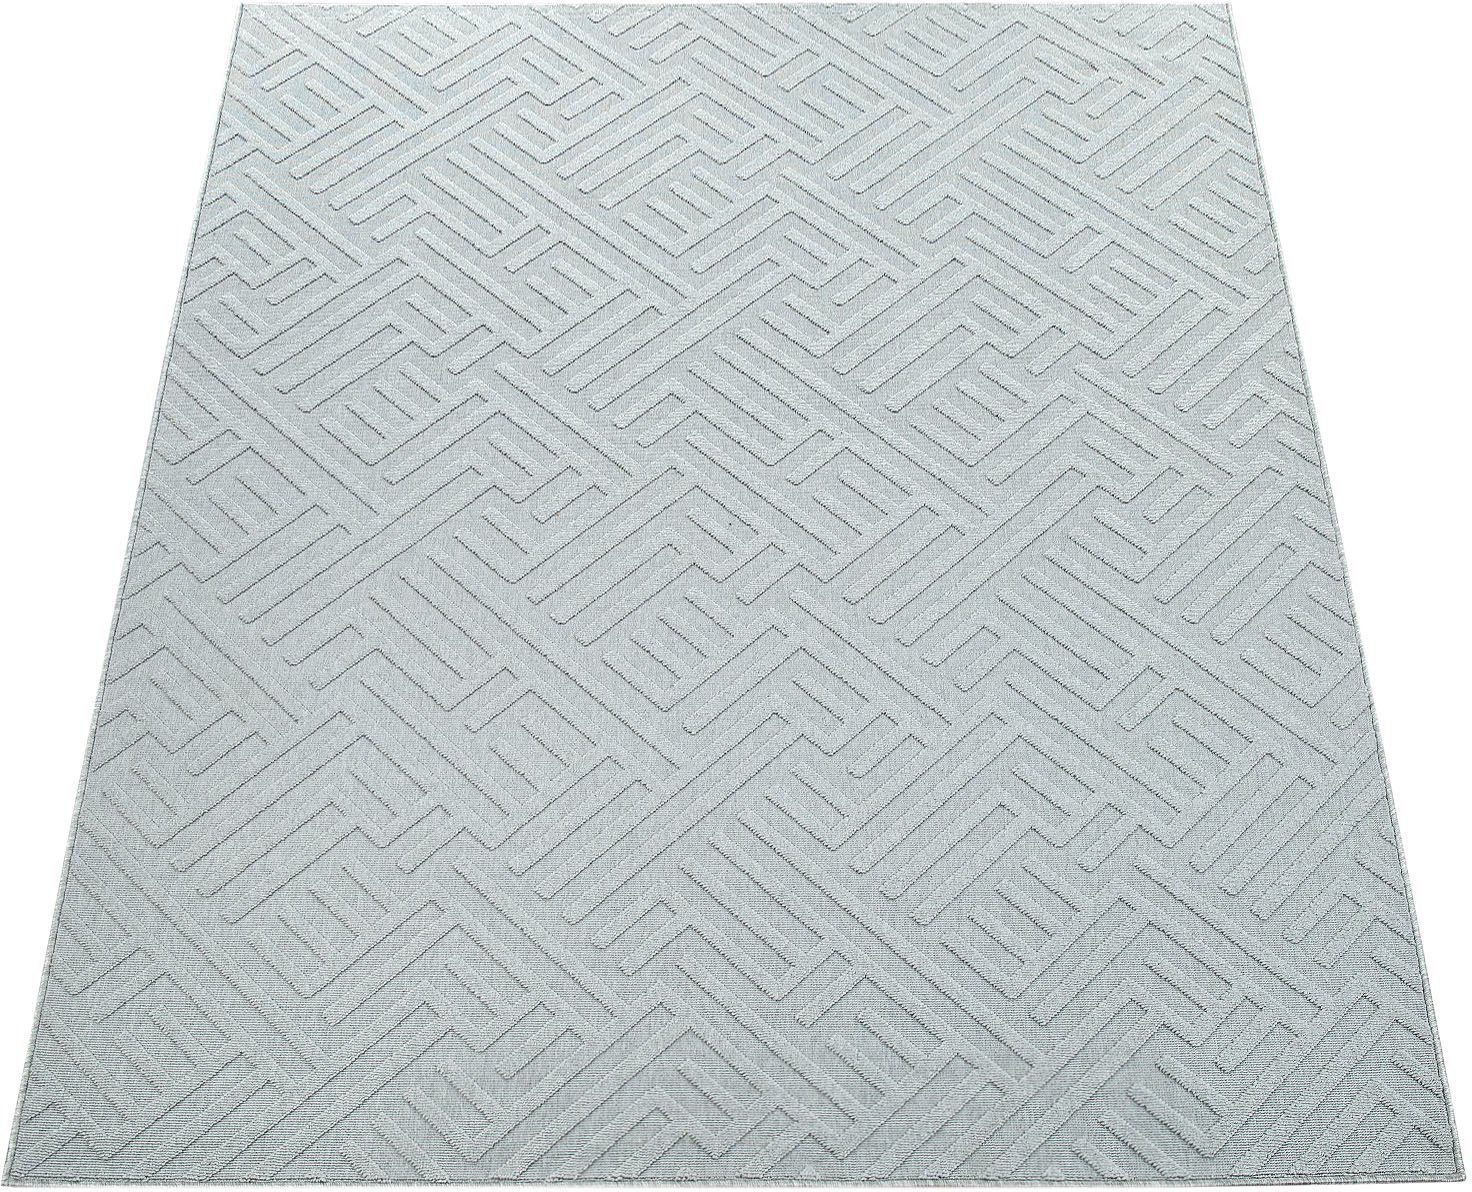 Teppich Namur 326, Paco Home, rechteckig, Höhe: 4 mm, Kurzflor, Uni-Farben, modernes Design, 3D-Effekt, Outdoor geeignet